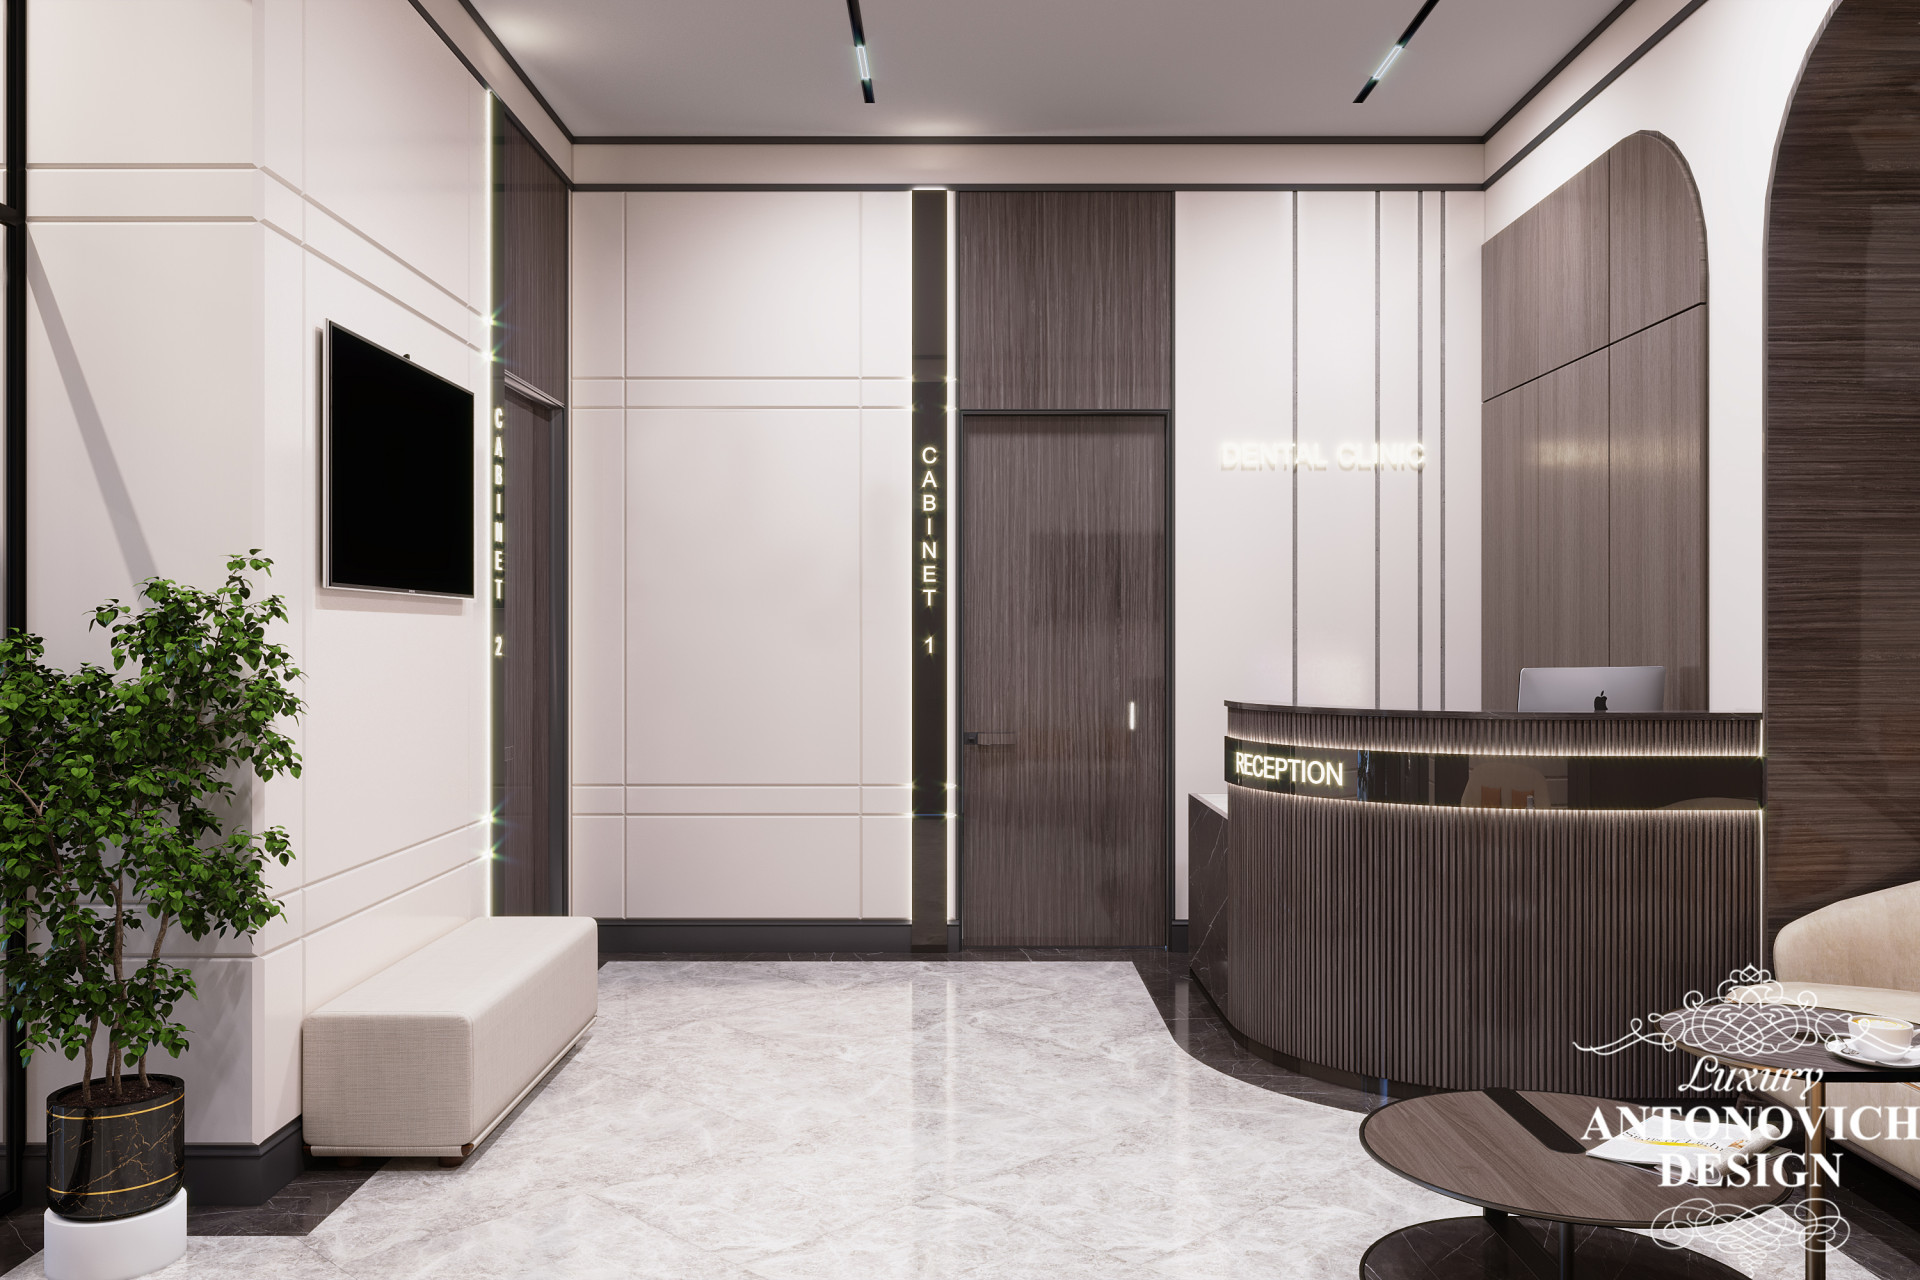 Design & Fit Out Dental Clinic Dubai by Luxury Antonovich Design